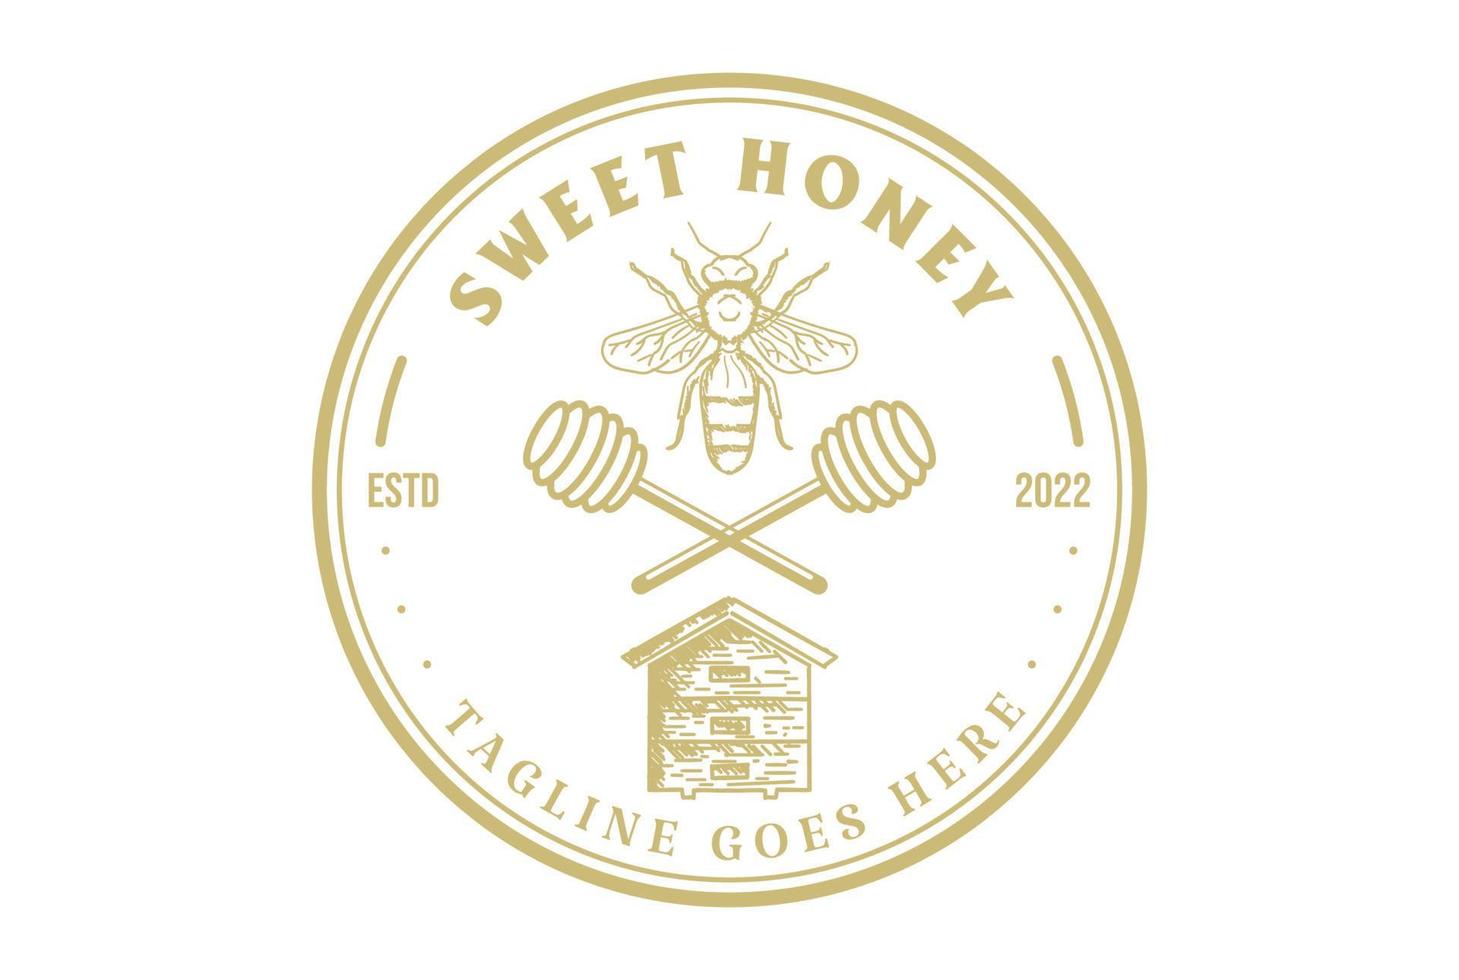 Circular Circle Round Sweet Honey Bee Farm Badge Emblem Label Logo Design vector